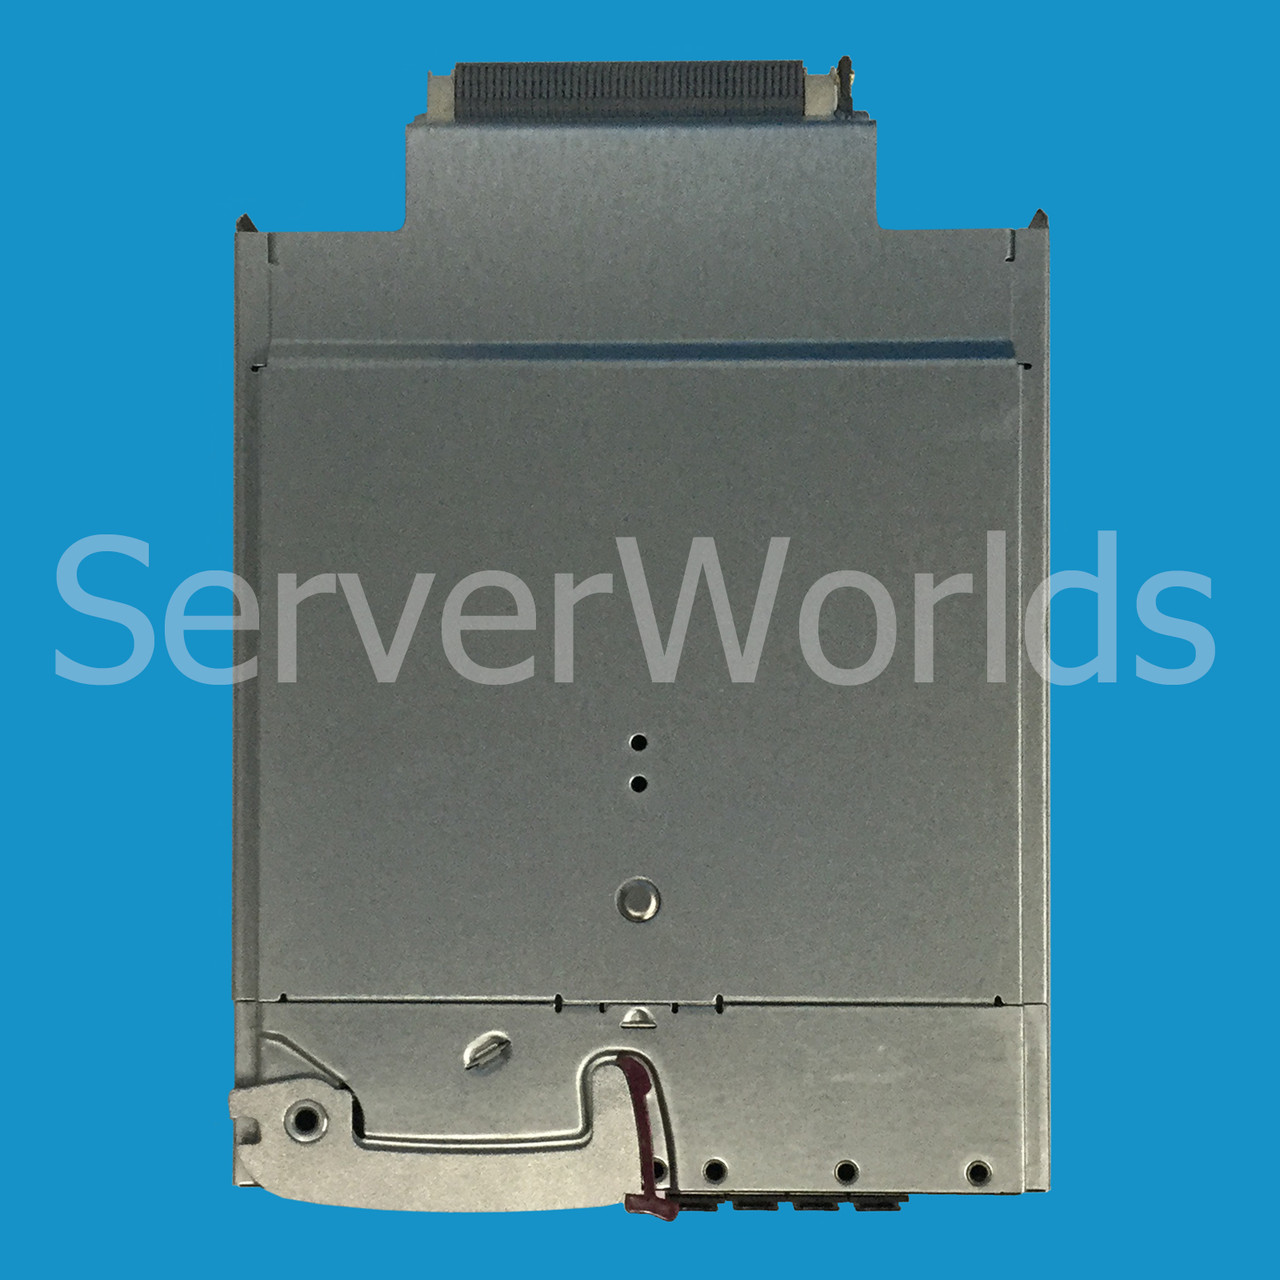 HP 489865-002 B Series 8/24c Brocade San switch AJ821B